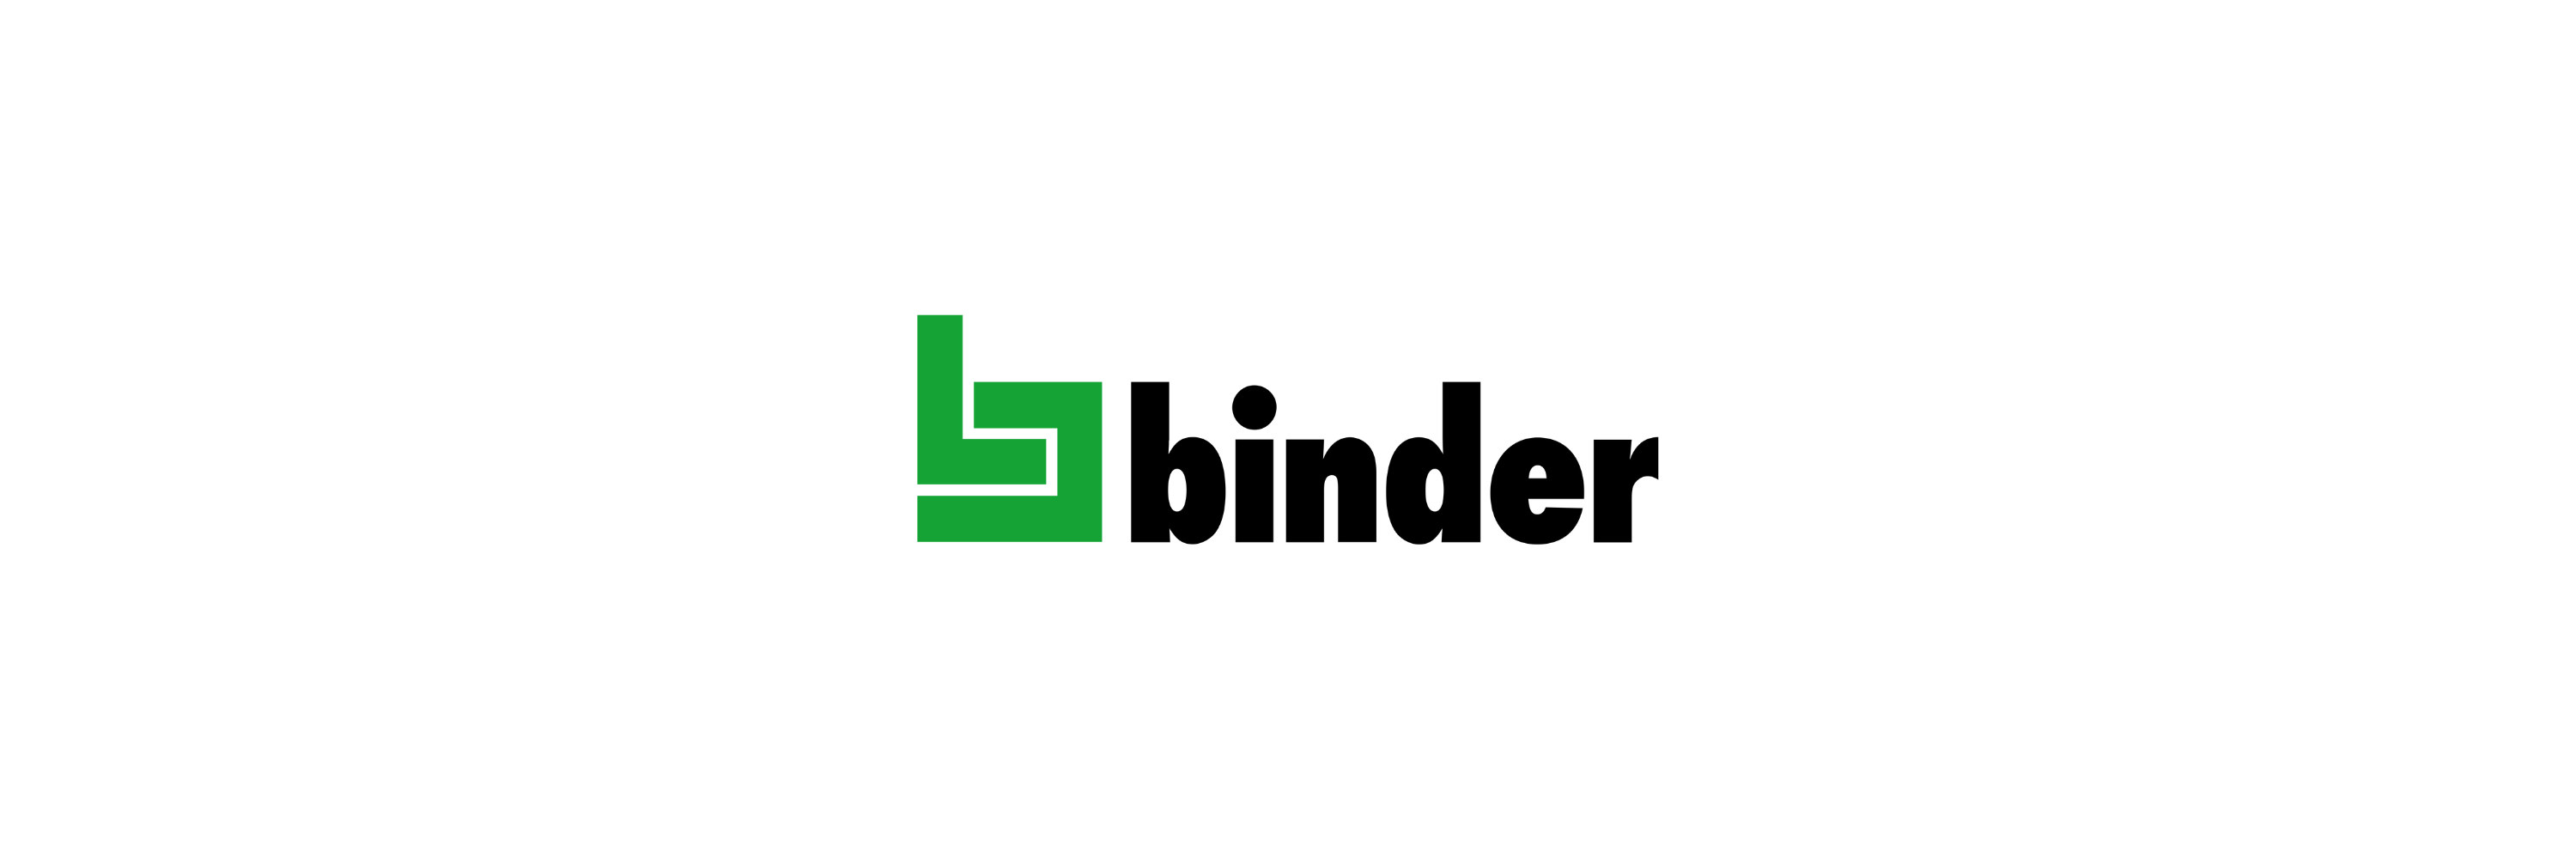 Binder - Klenk Maschinenhandel